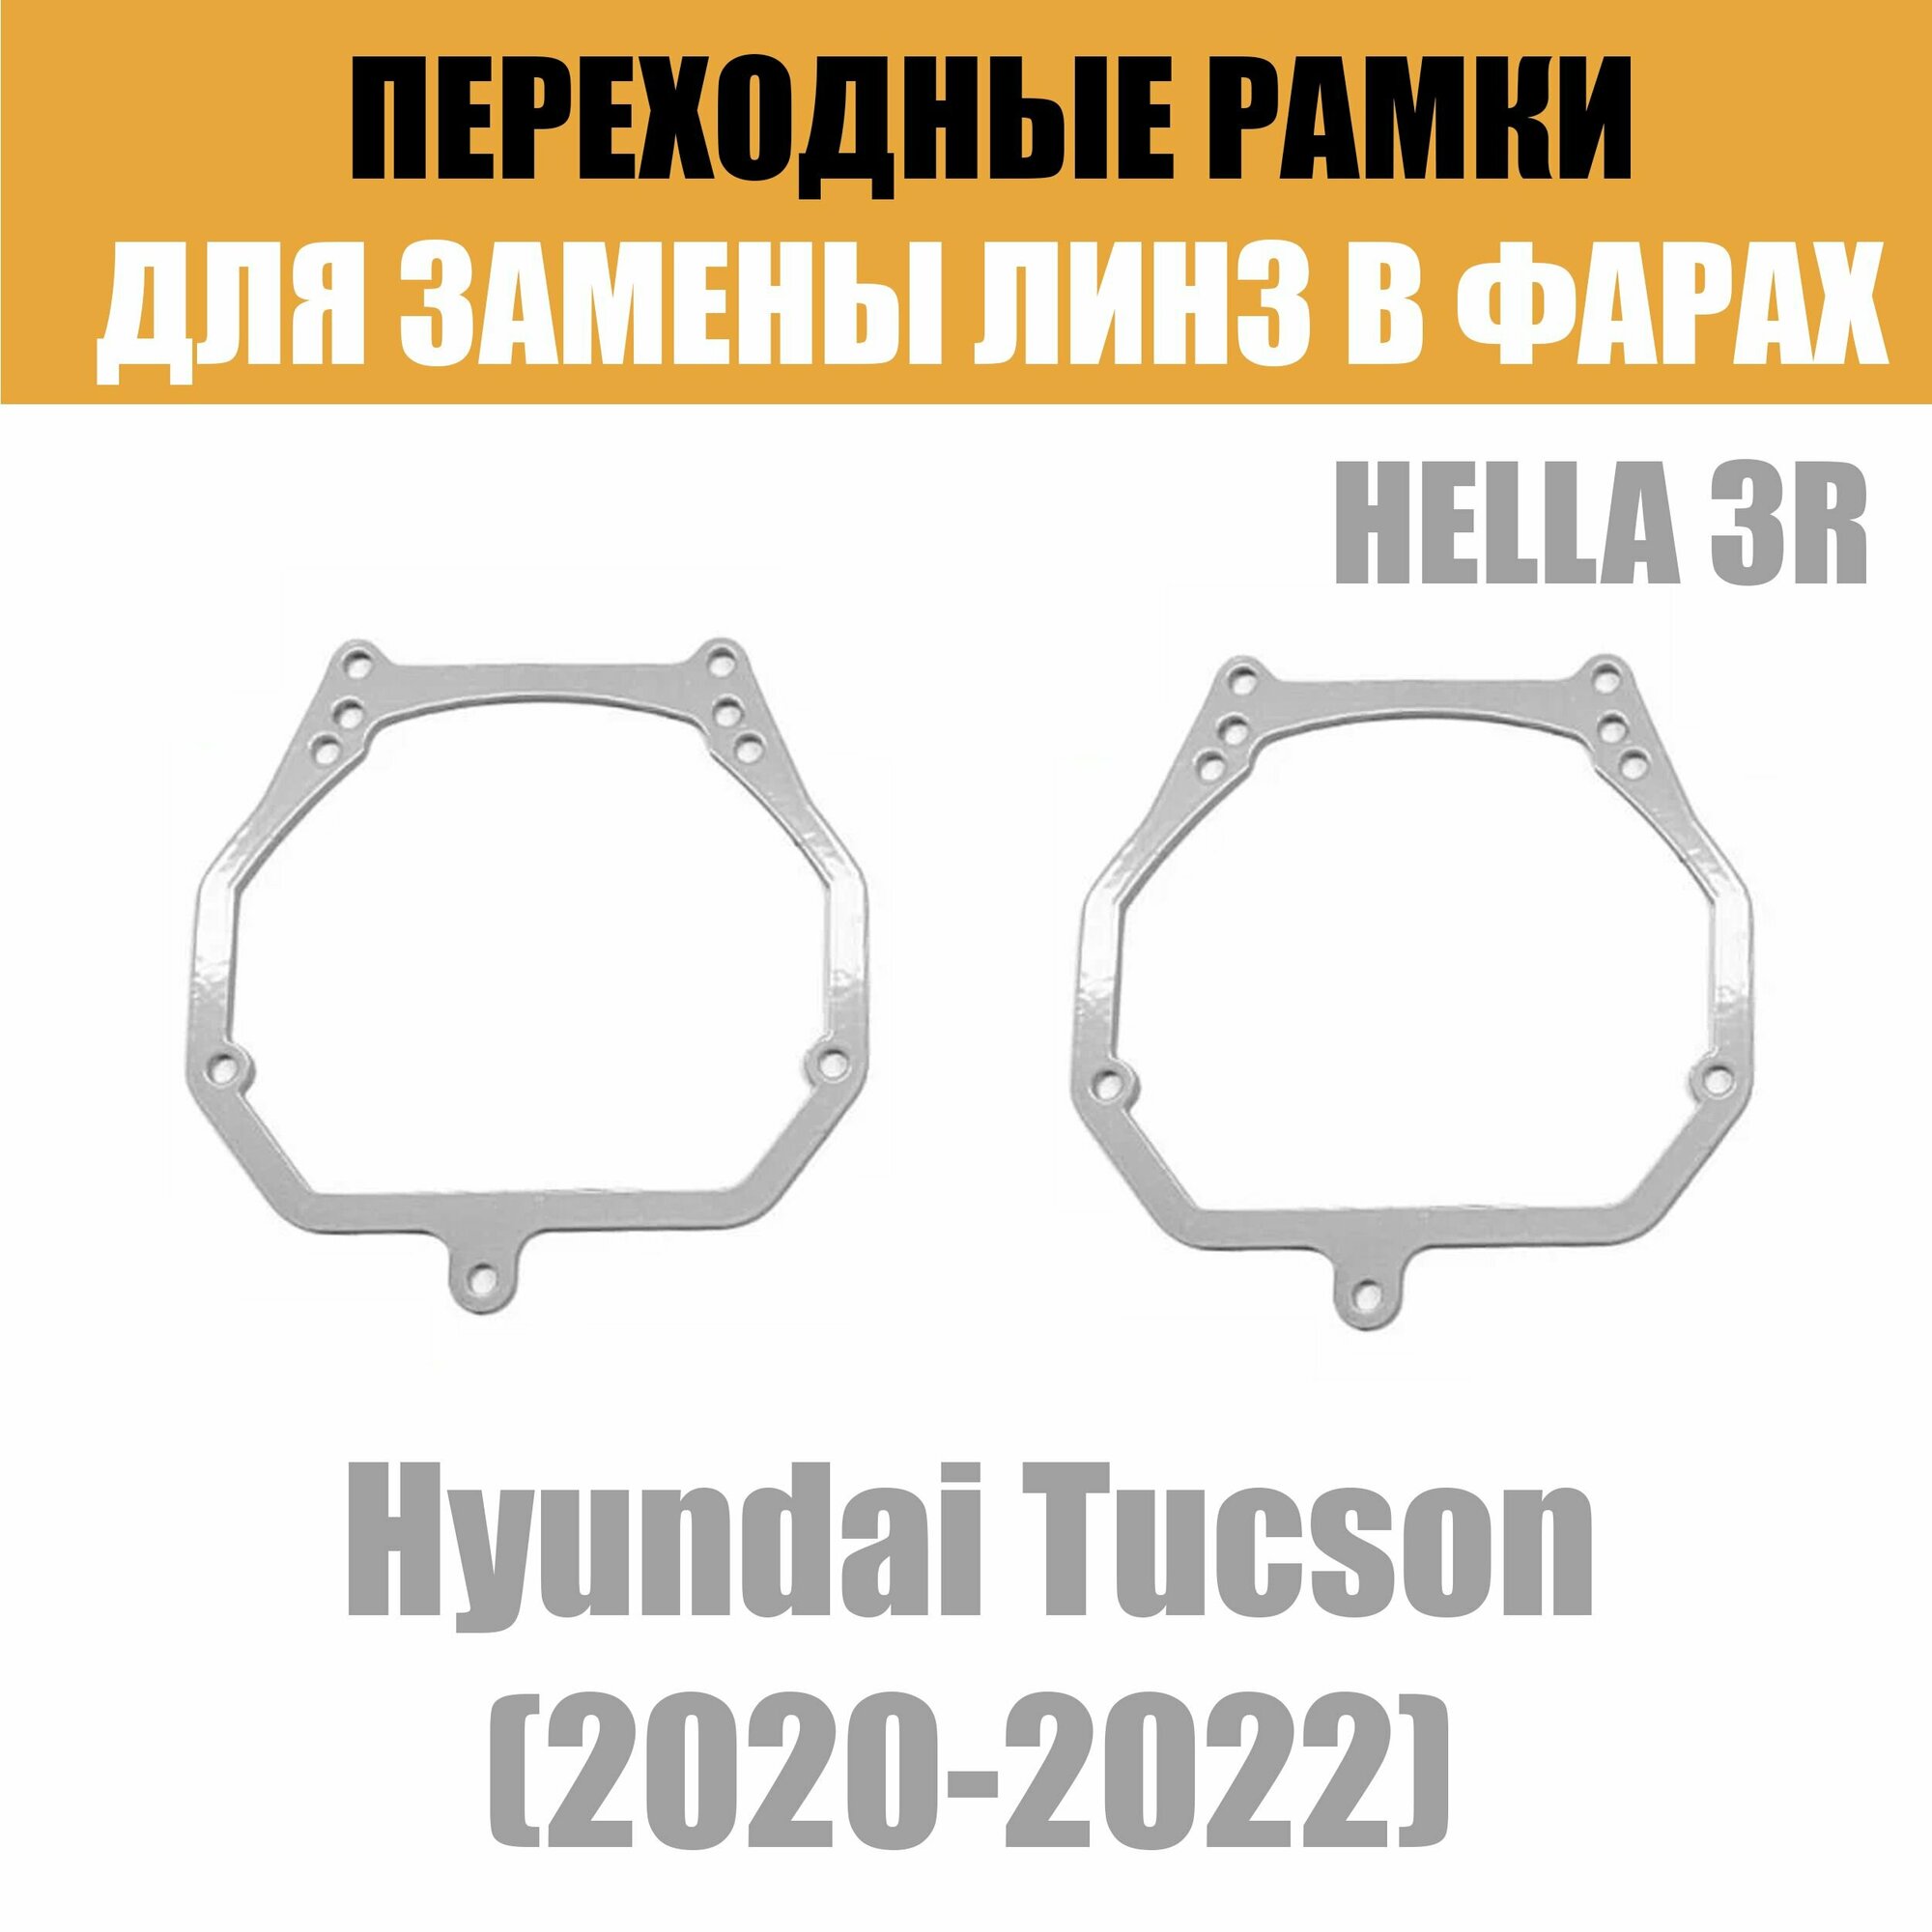 Переходные рамки для линз №2 на Hyundai Tucson (2020-2022) под модуль Hella 3R/Hella 3 (Комплект 2шт)